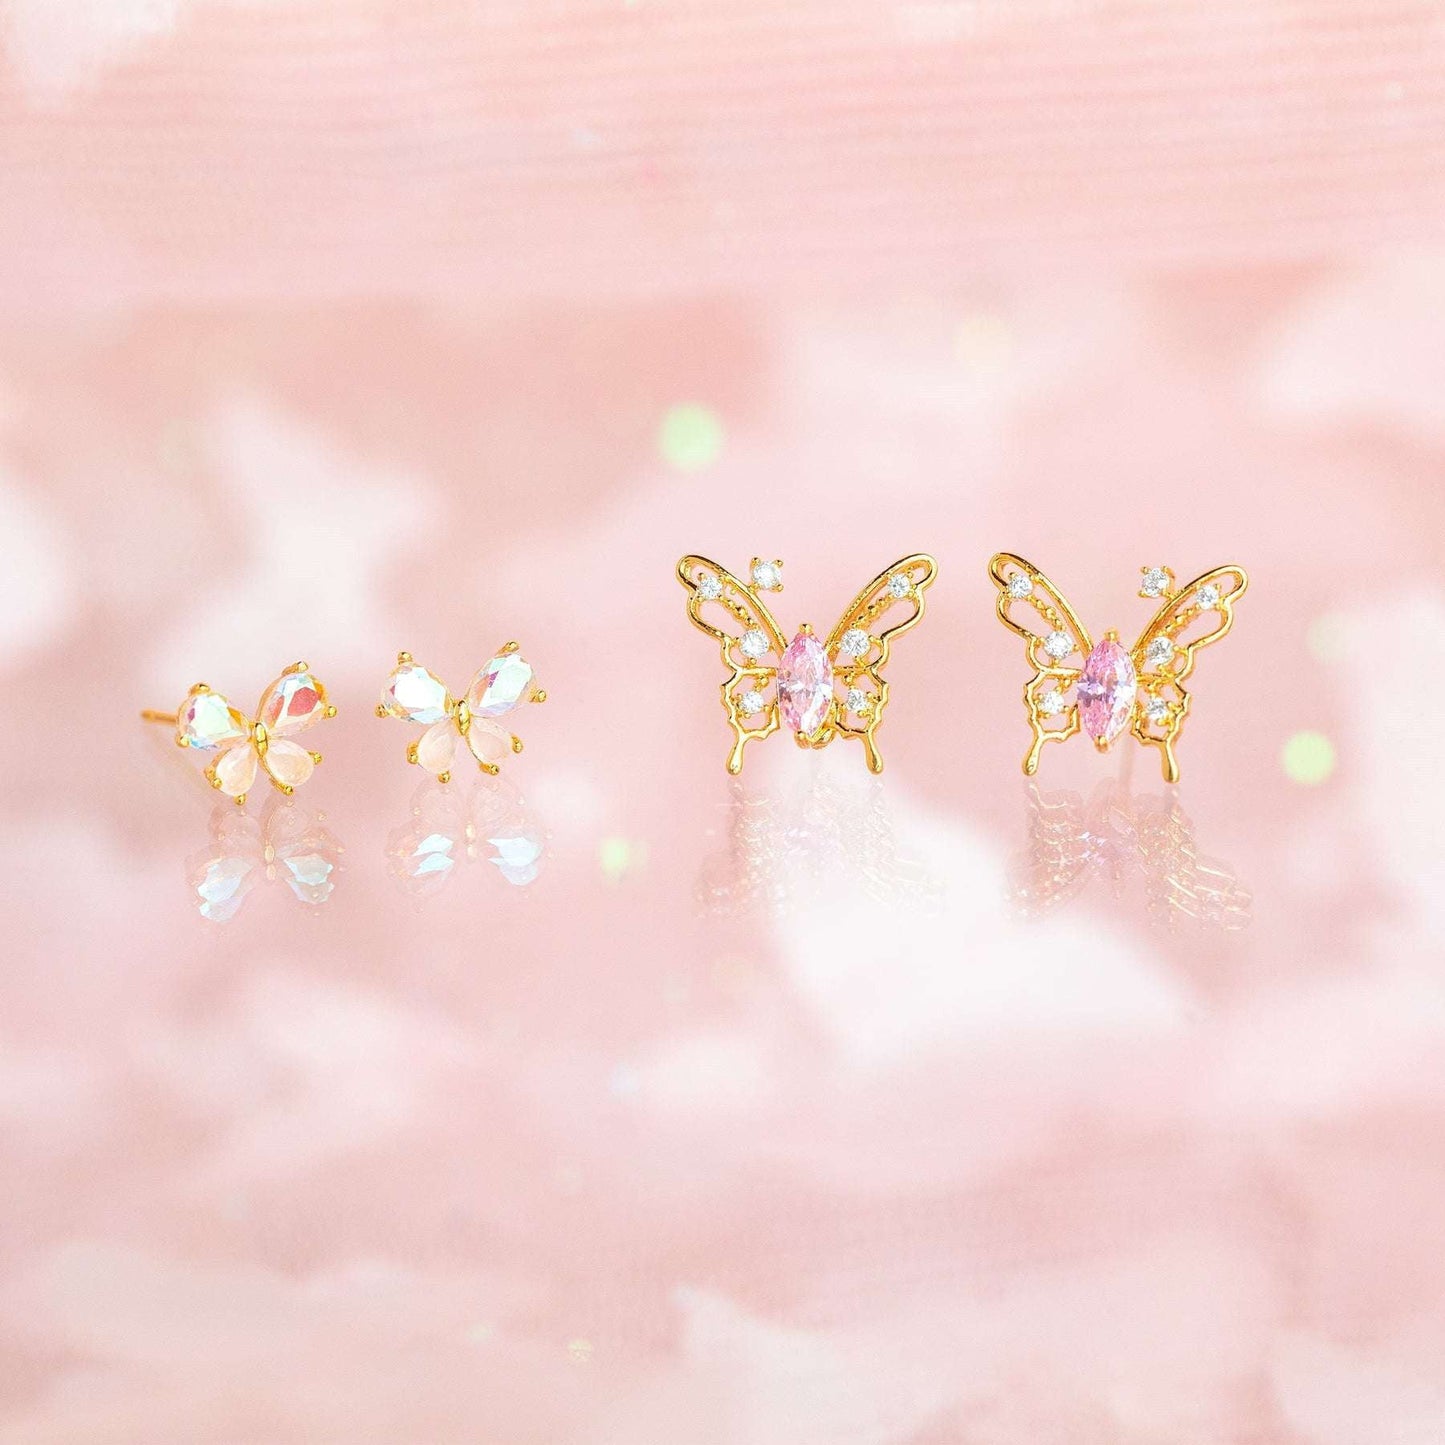 Elegant Women's Jewelry, Sterling Silver Butterfly, Zircon Stud Earrings - available at Sparq Mart